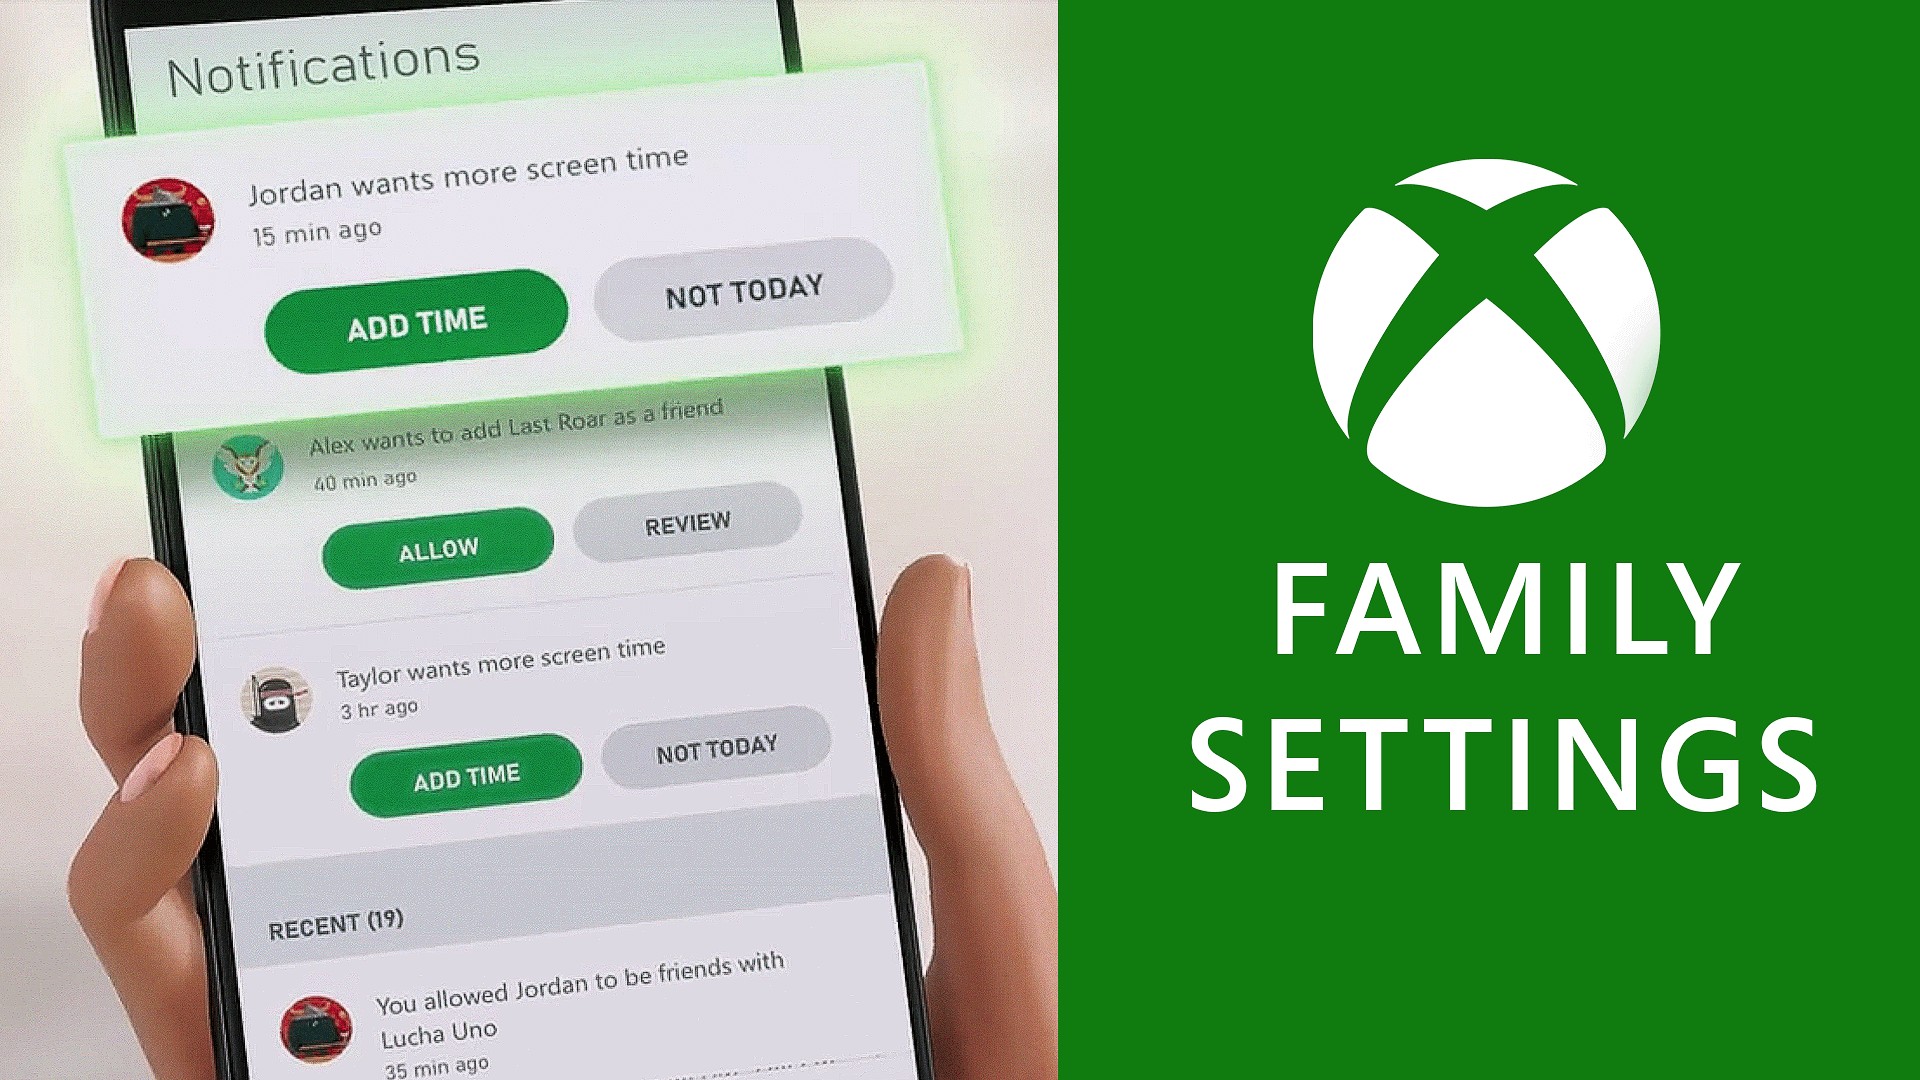 Aplicativo Xbox Family Settings